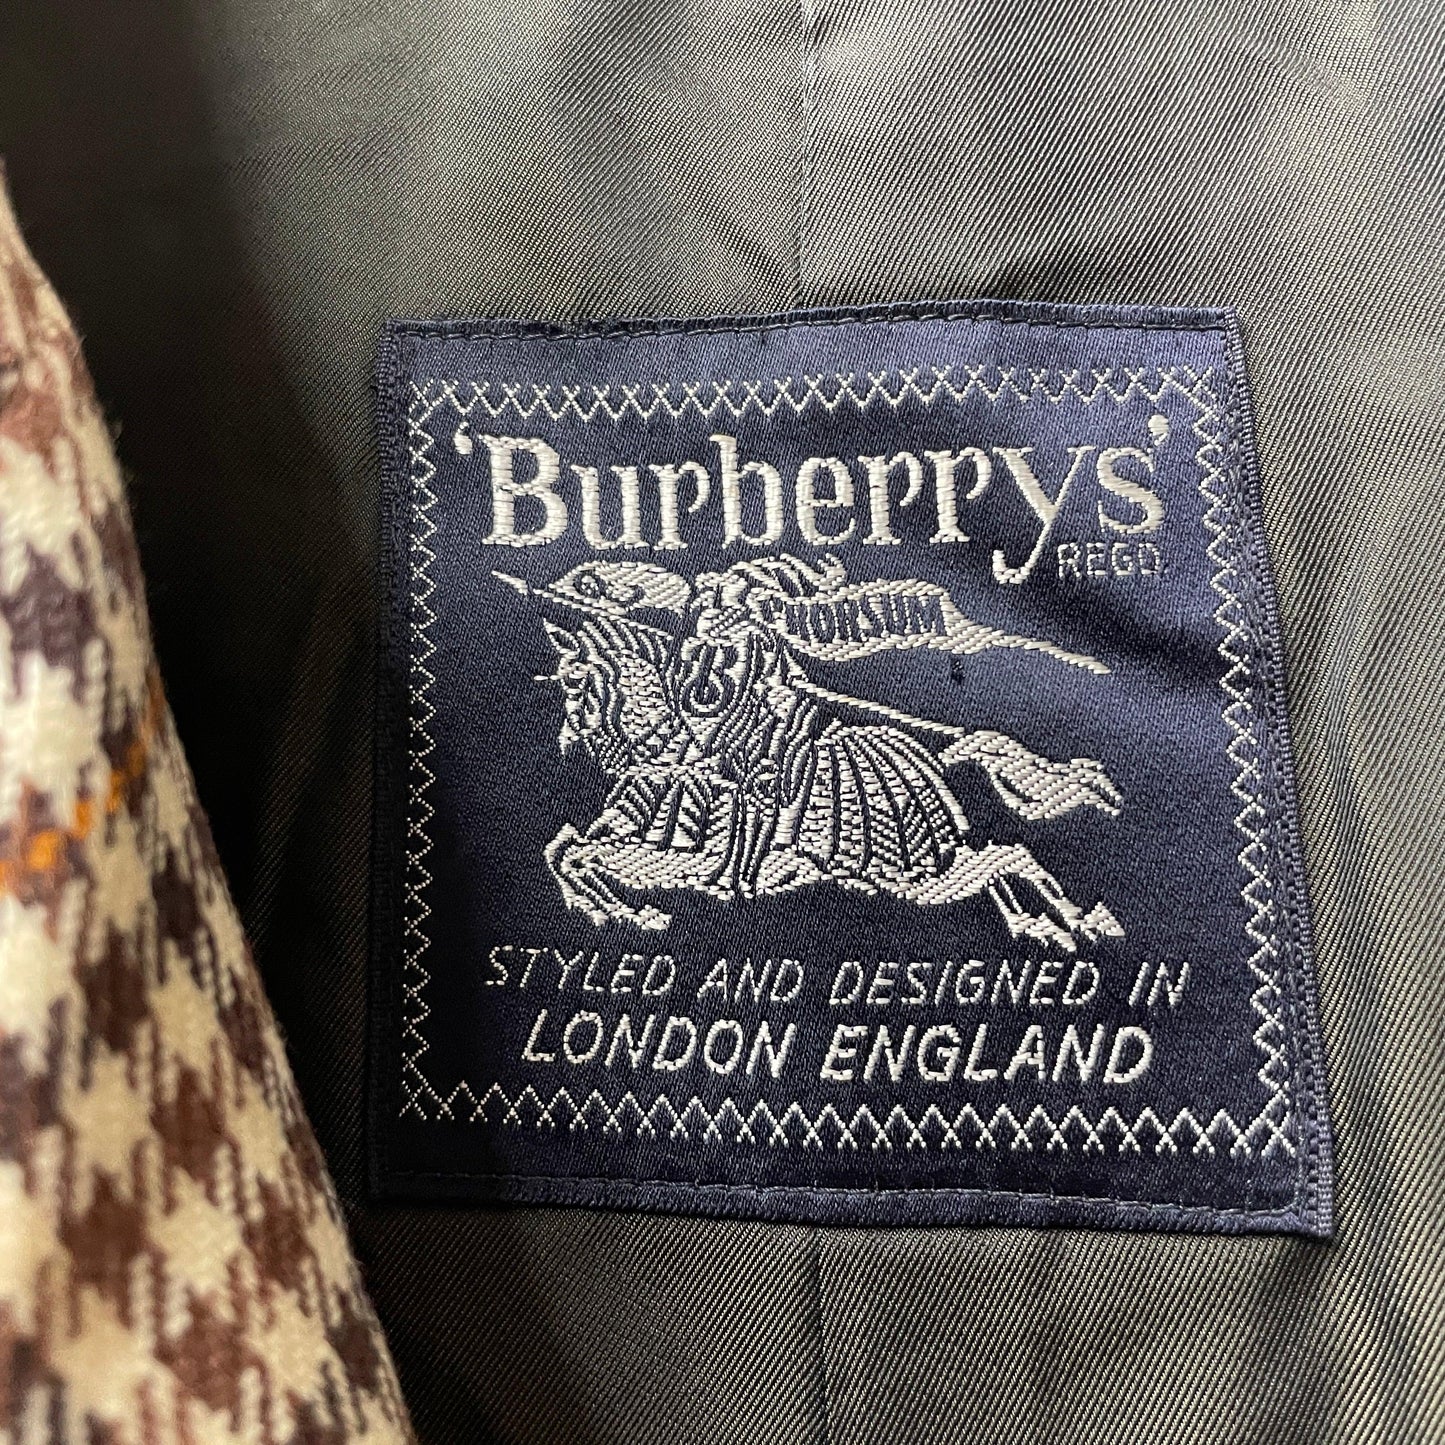 burberrys coat バーバリー　コート　burberry